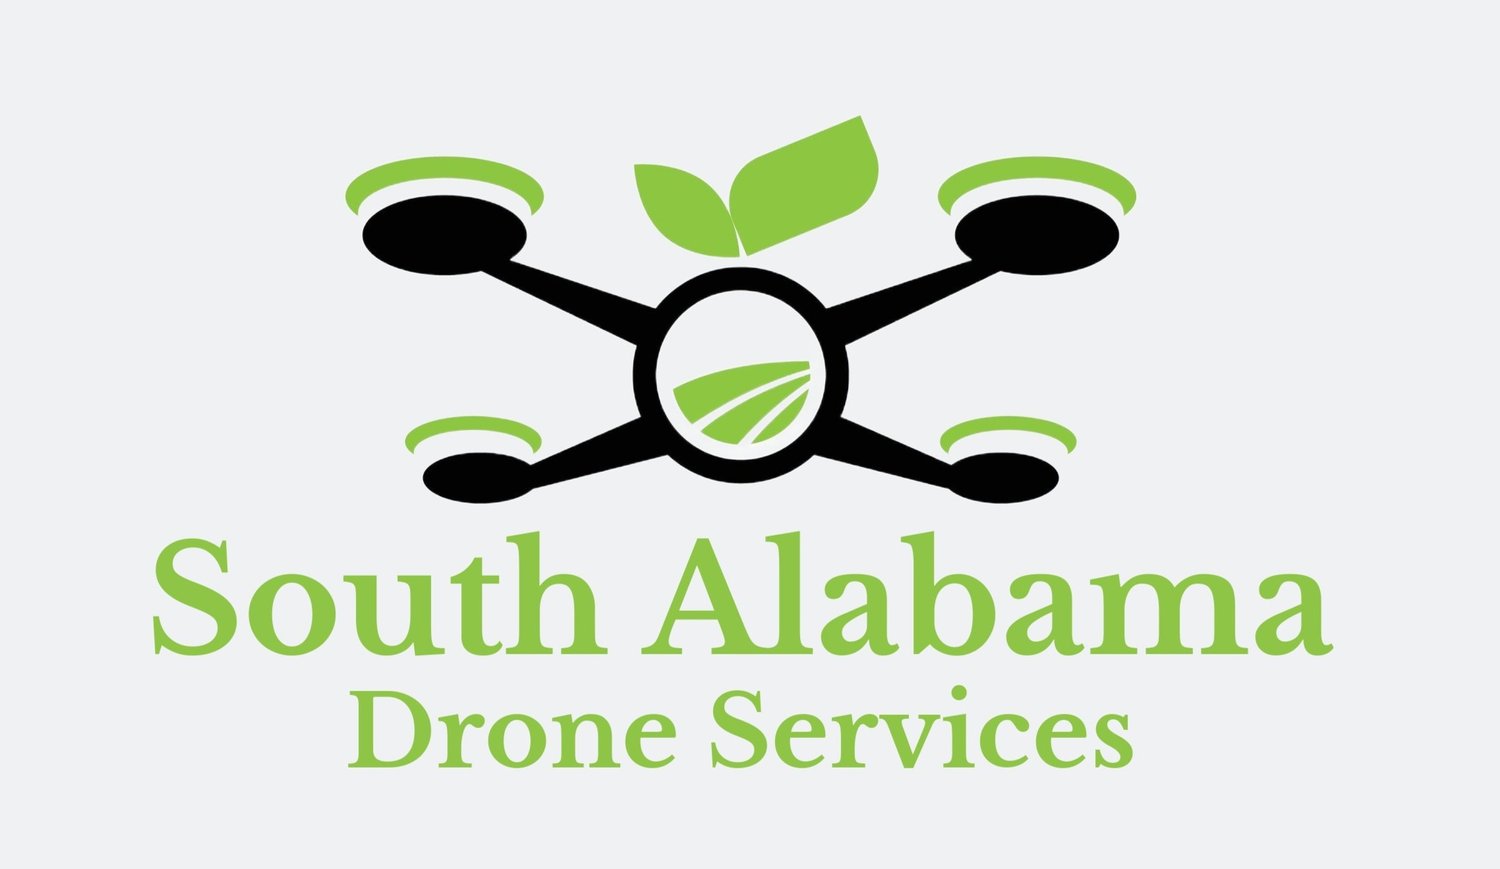 South Alabama Drone Services